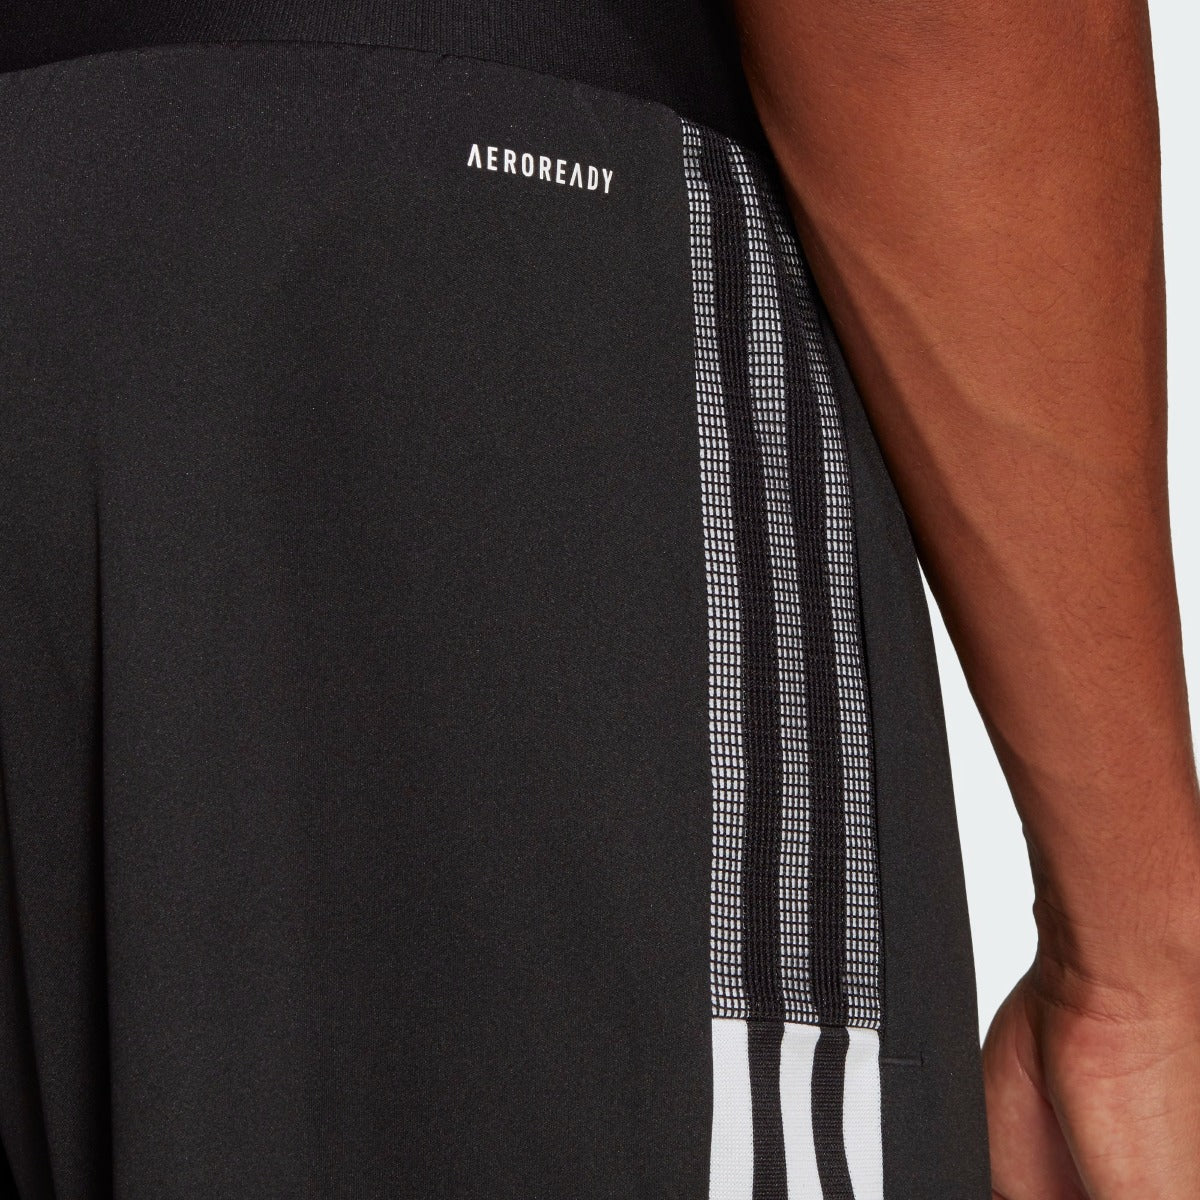 Adidas Tiro 21 Training Shorts - Black-White